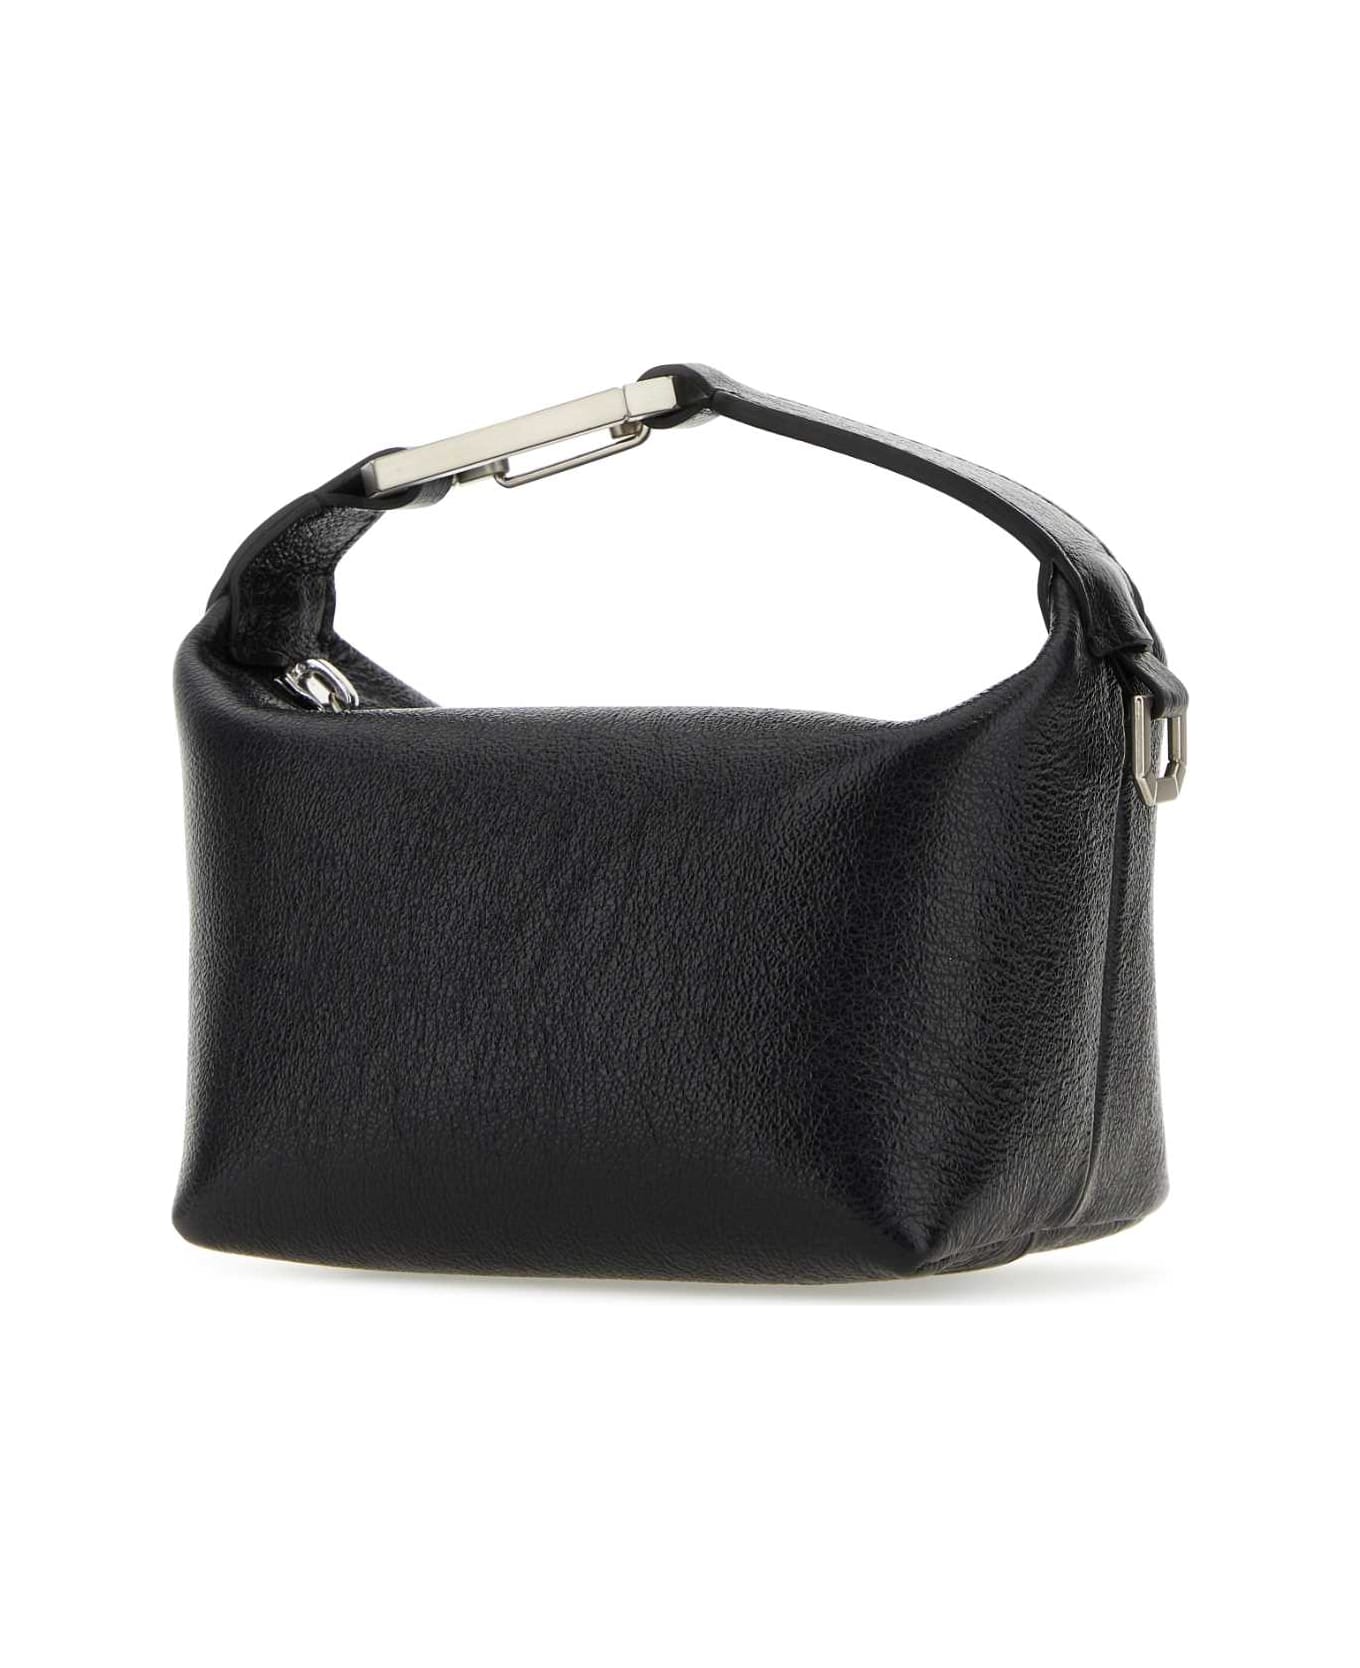 EÉRA Black Leather Moonbag Handbag - BLACK